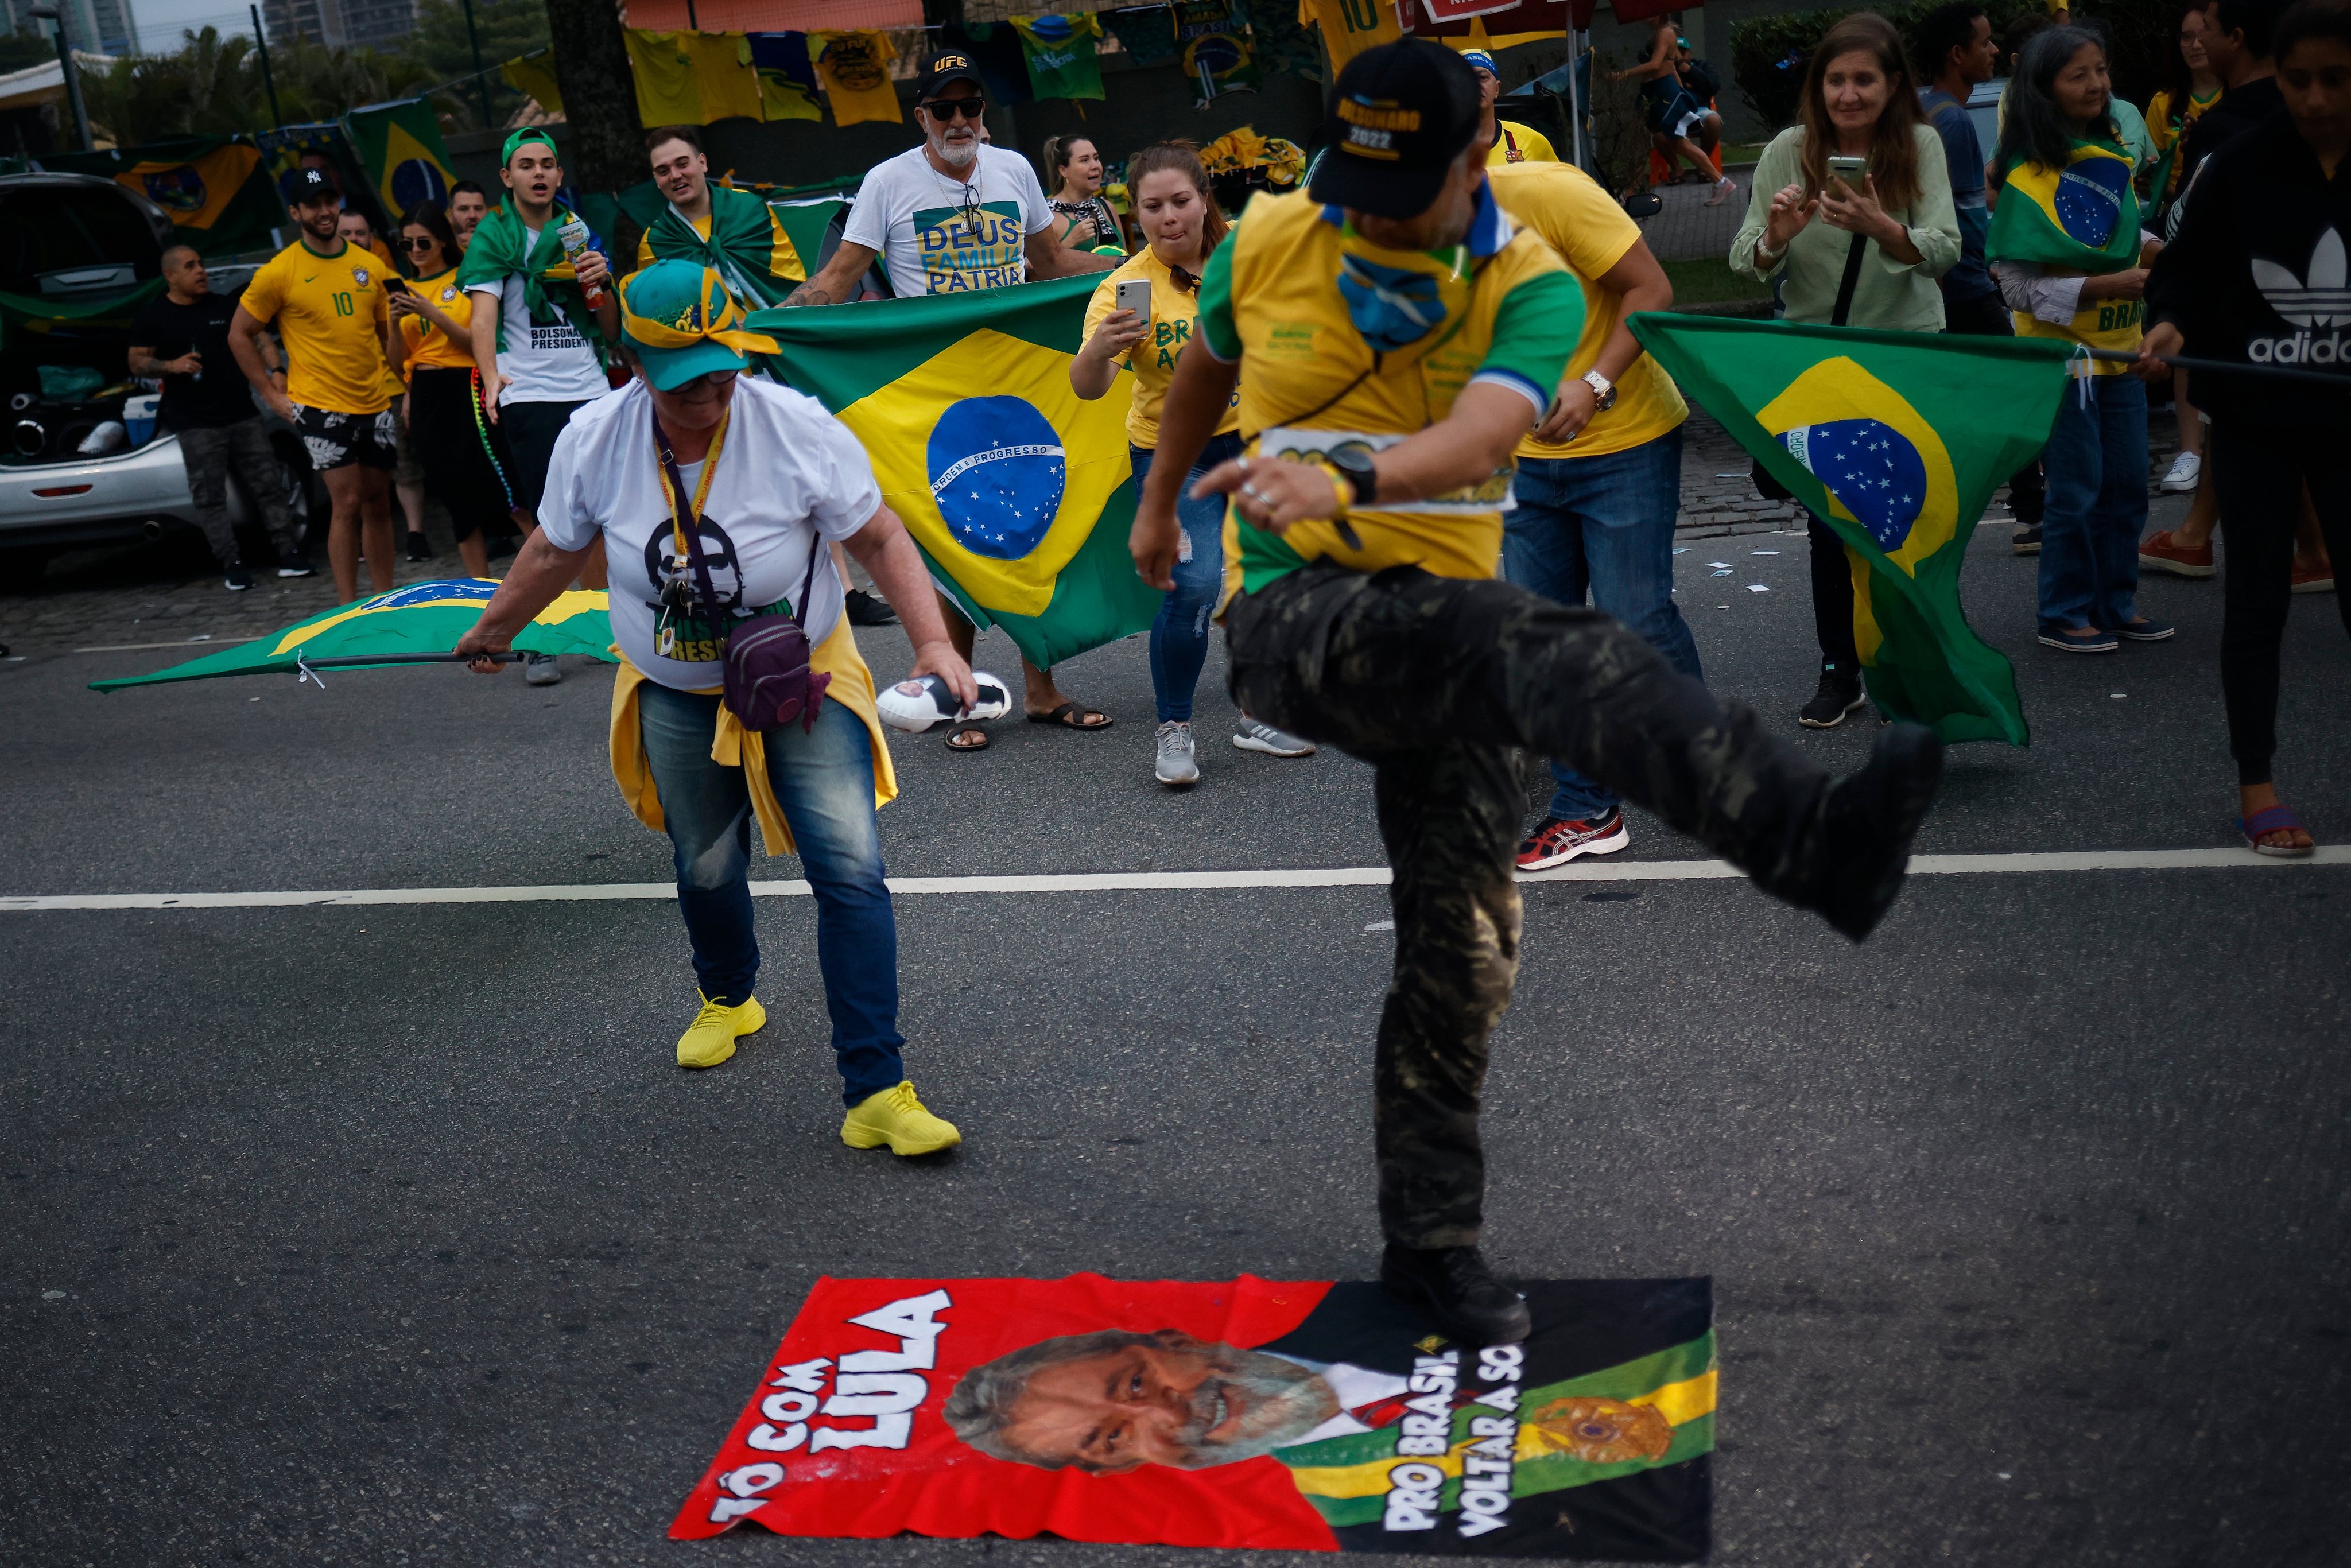 Brazilians Go to Polls in Tight Elections Polarized between Lula and Bolsonaro